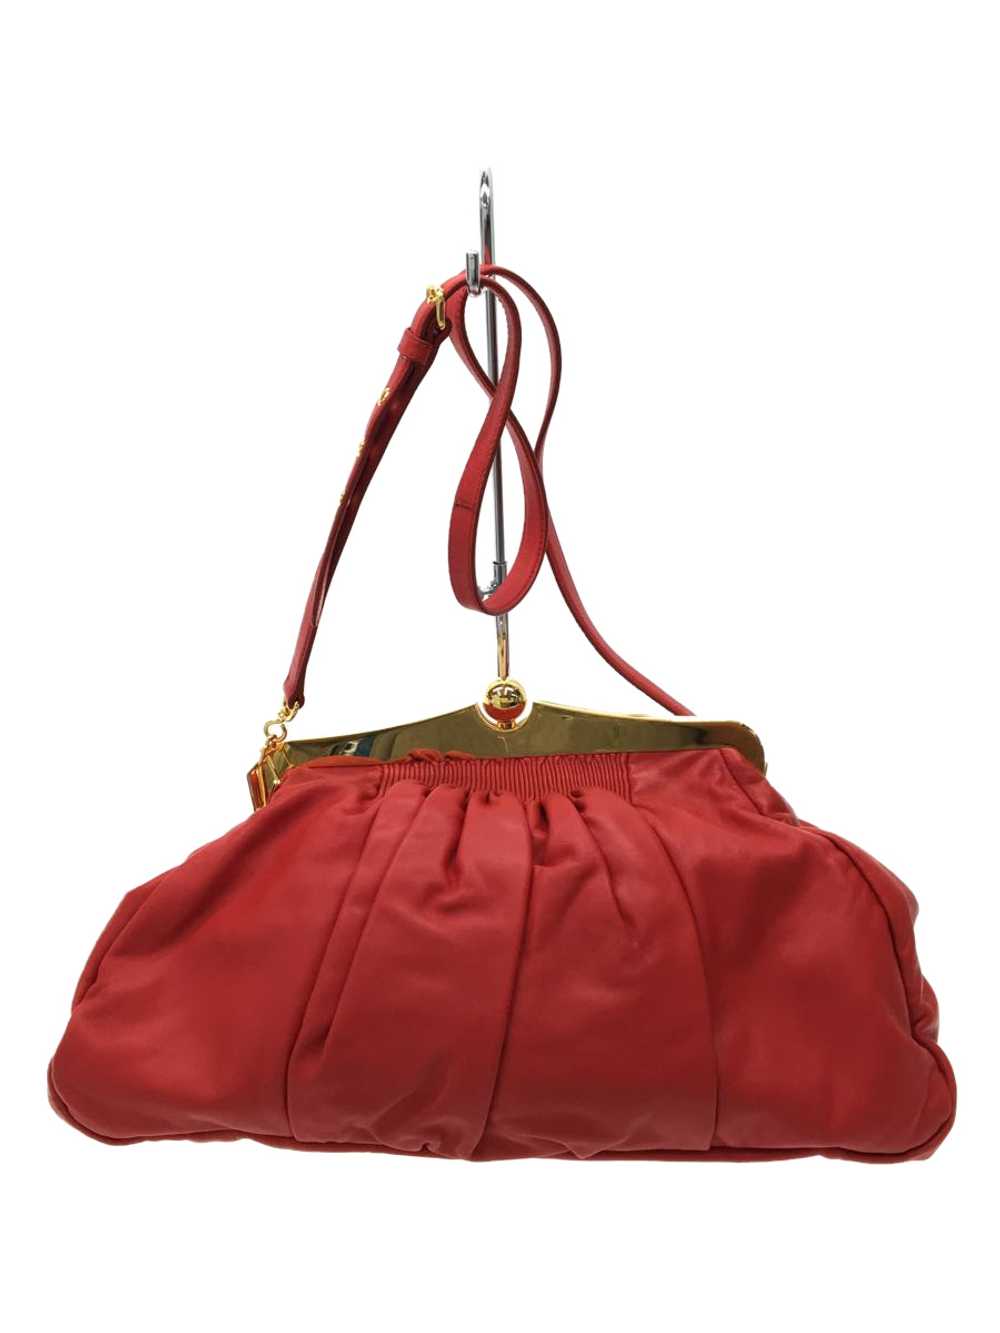 MIUMIU Purse/2Way Shoulder Bag/Leather/Red Bag - image 1